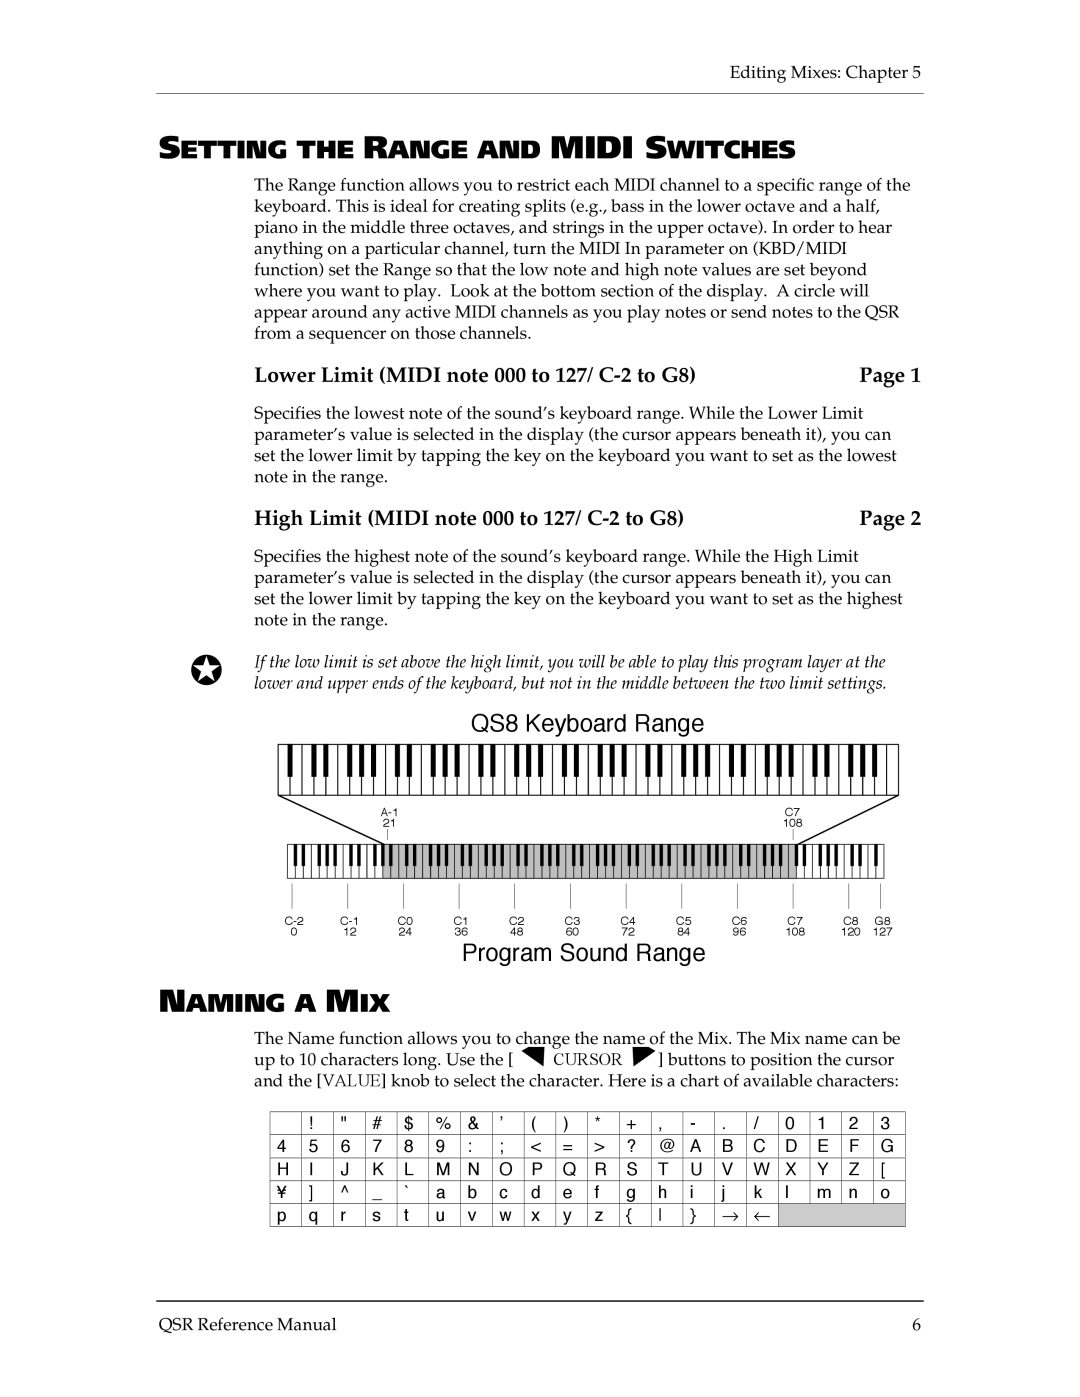 Alesis QSR 64 manual Setting The Range And Midi Switches, Naming A Mix, QS8 Keyboard Range, Program Sound Range, Page 